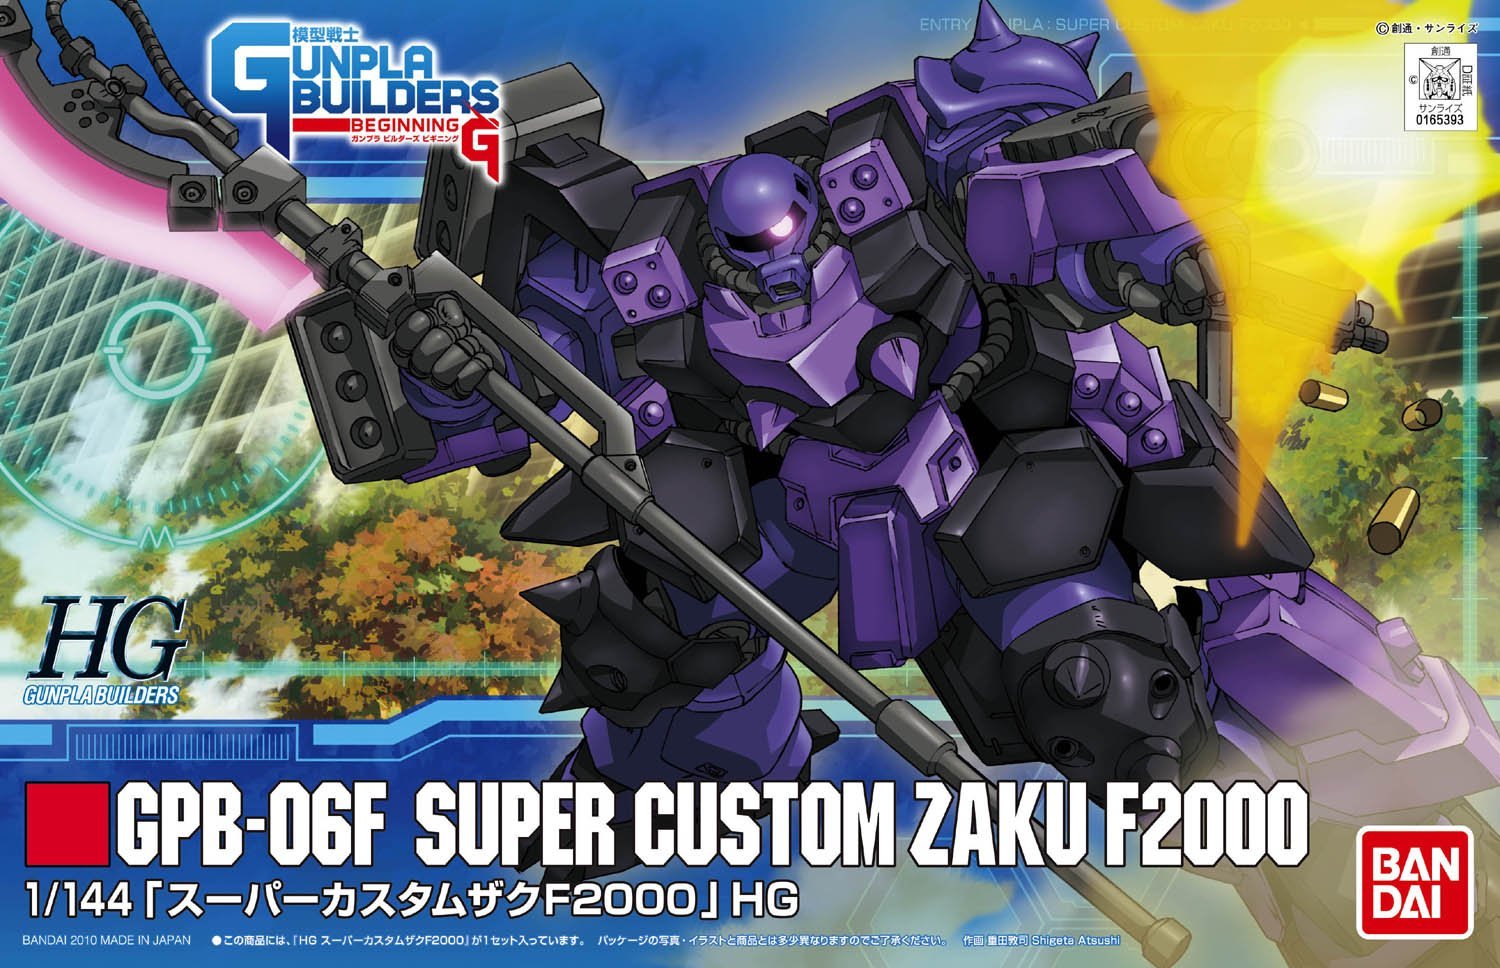 HGBF - GPB-06F Super Custom Zaku F2000